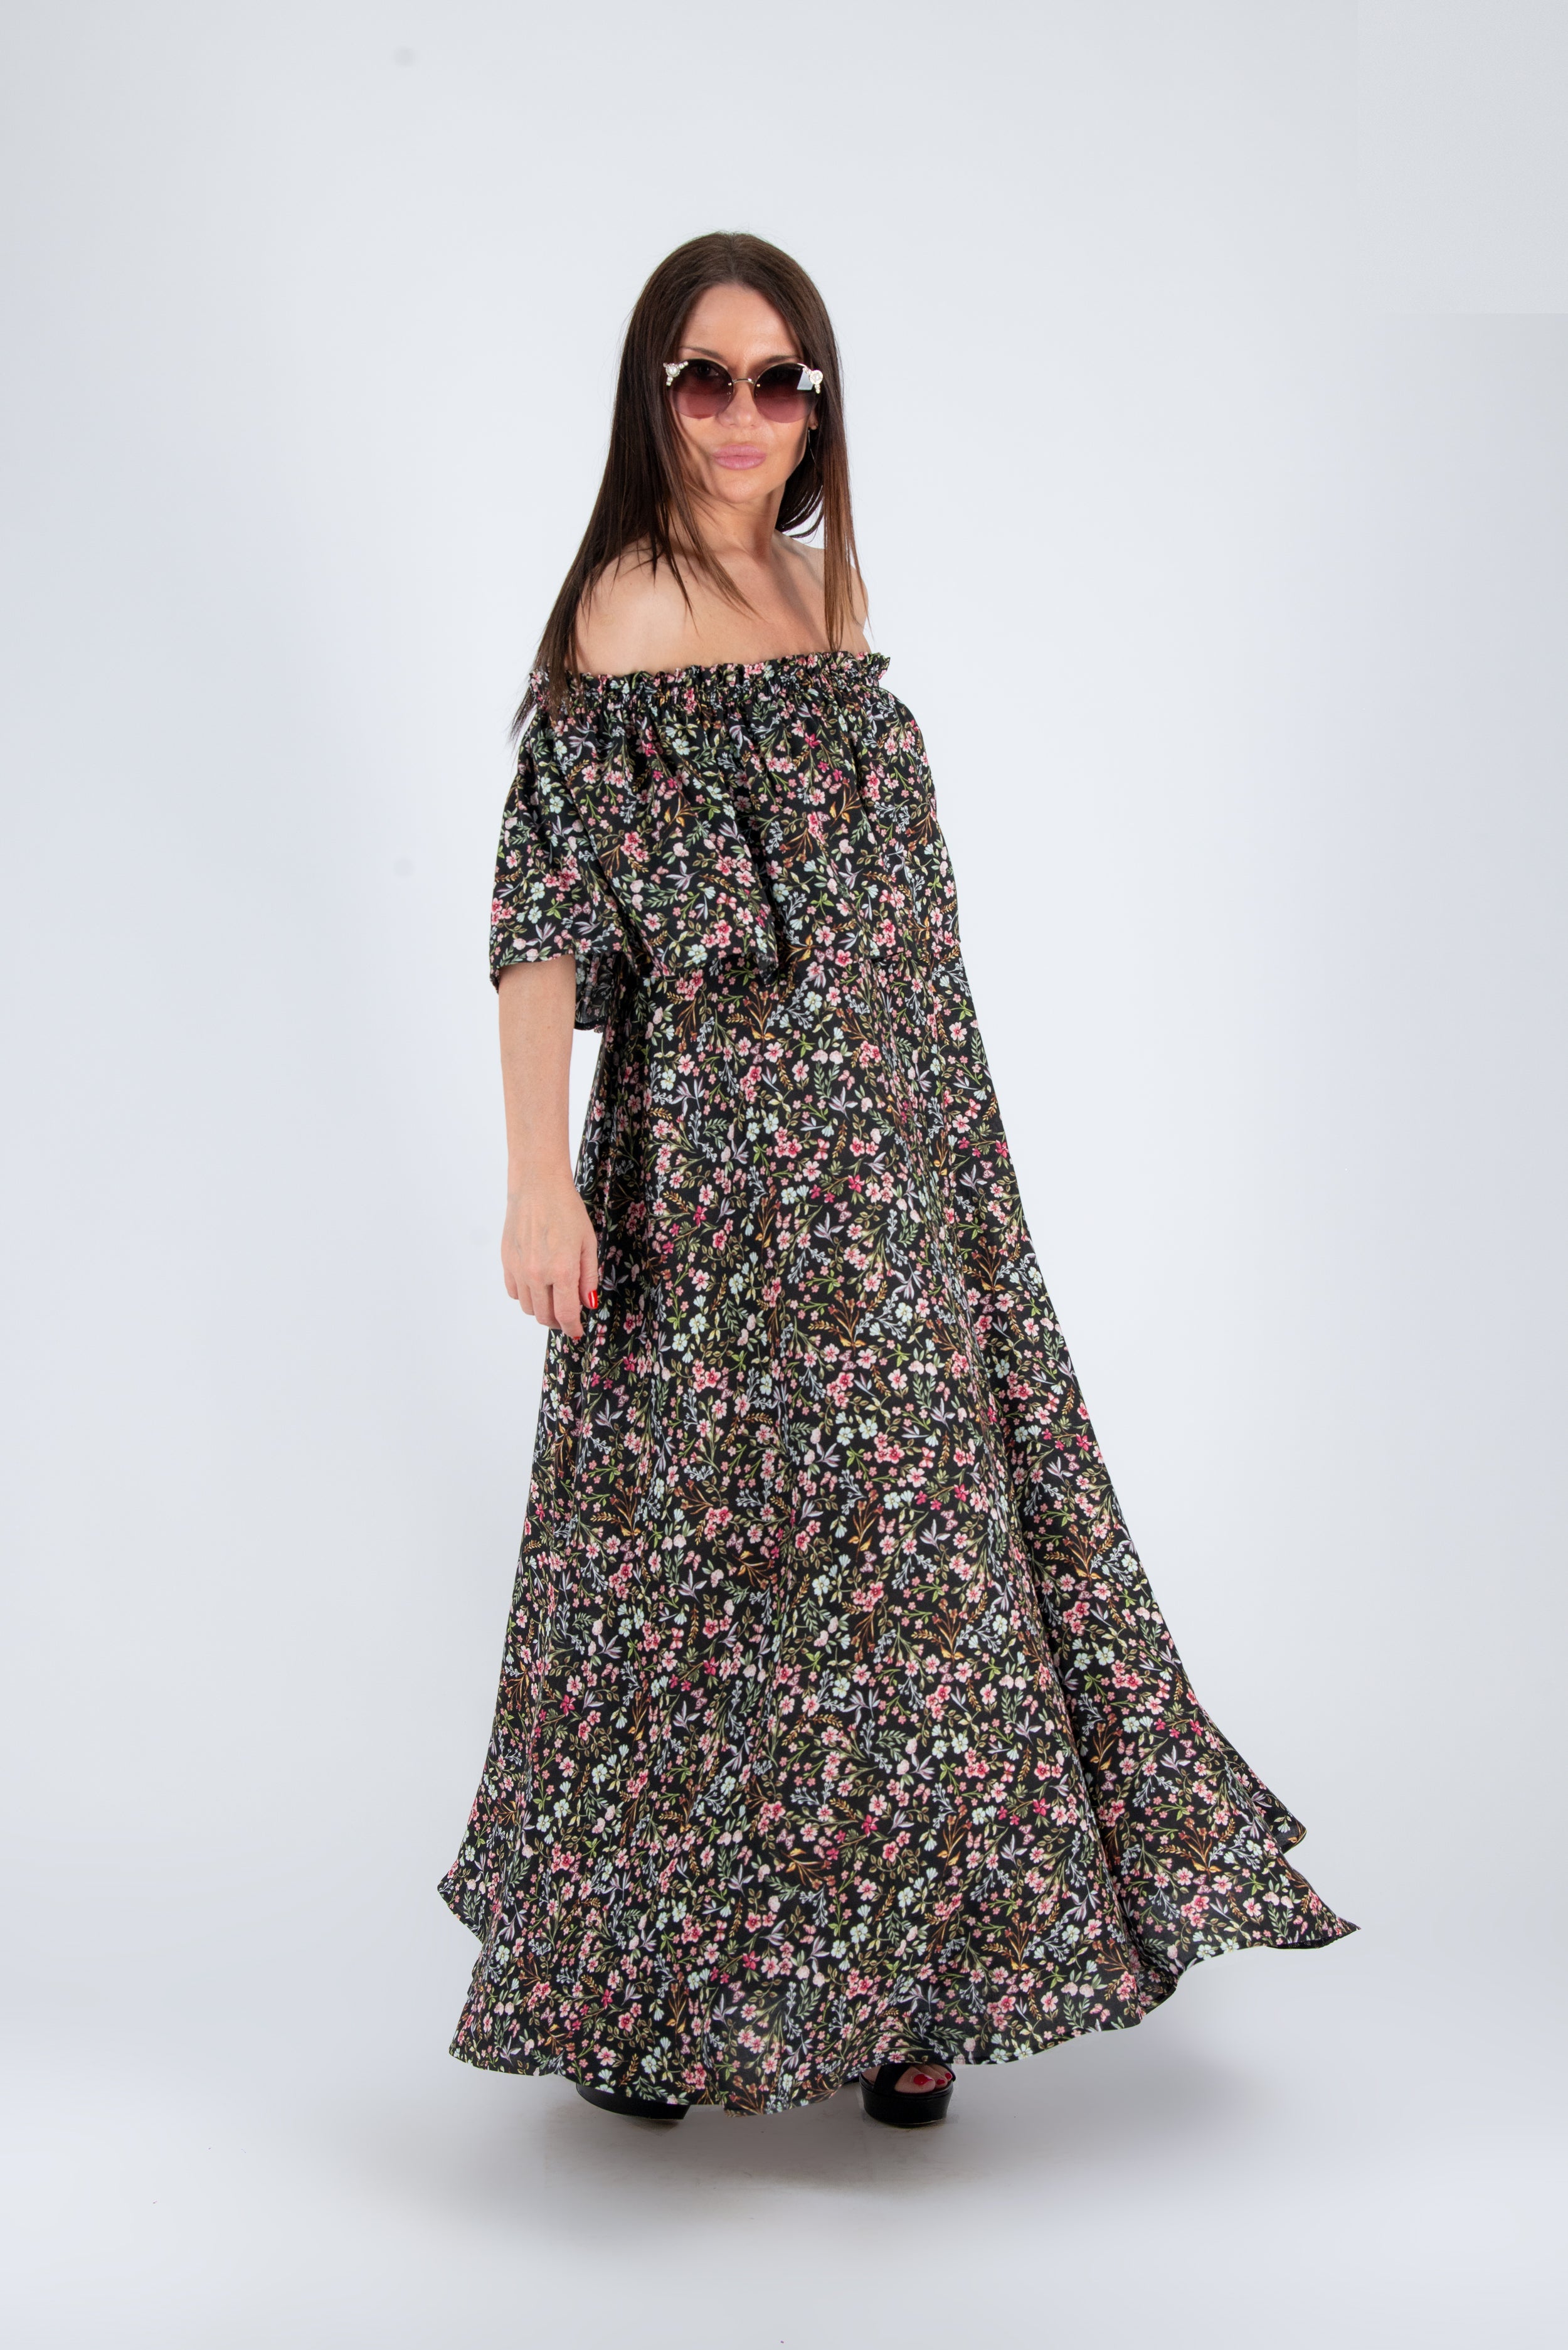 Off Shoulder Printed Summer Dress by EUG Fashion